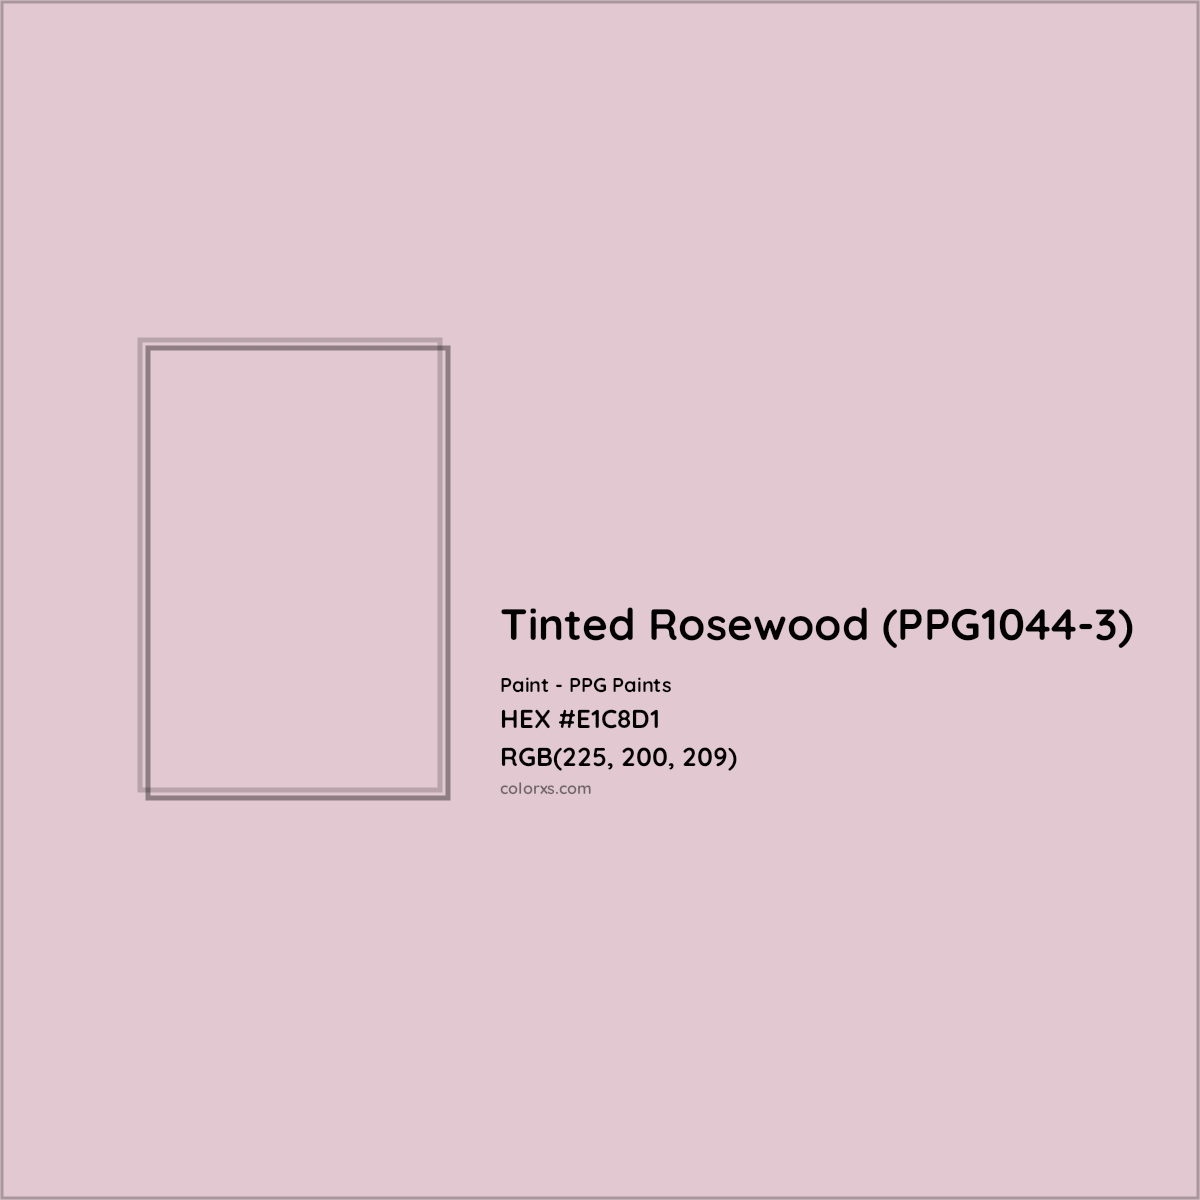 HEX #E1C8D1 Tinted Rosewood (PPG1044-3) Paint PPG Paints - Color Code